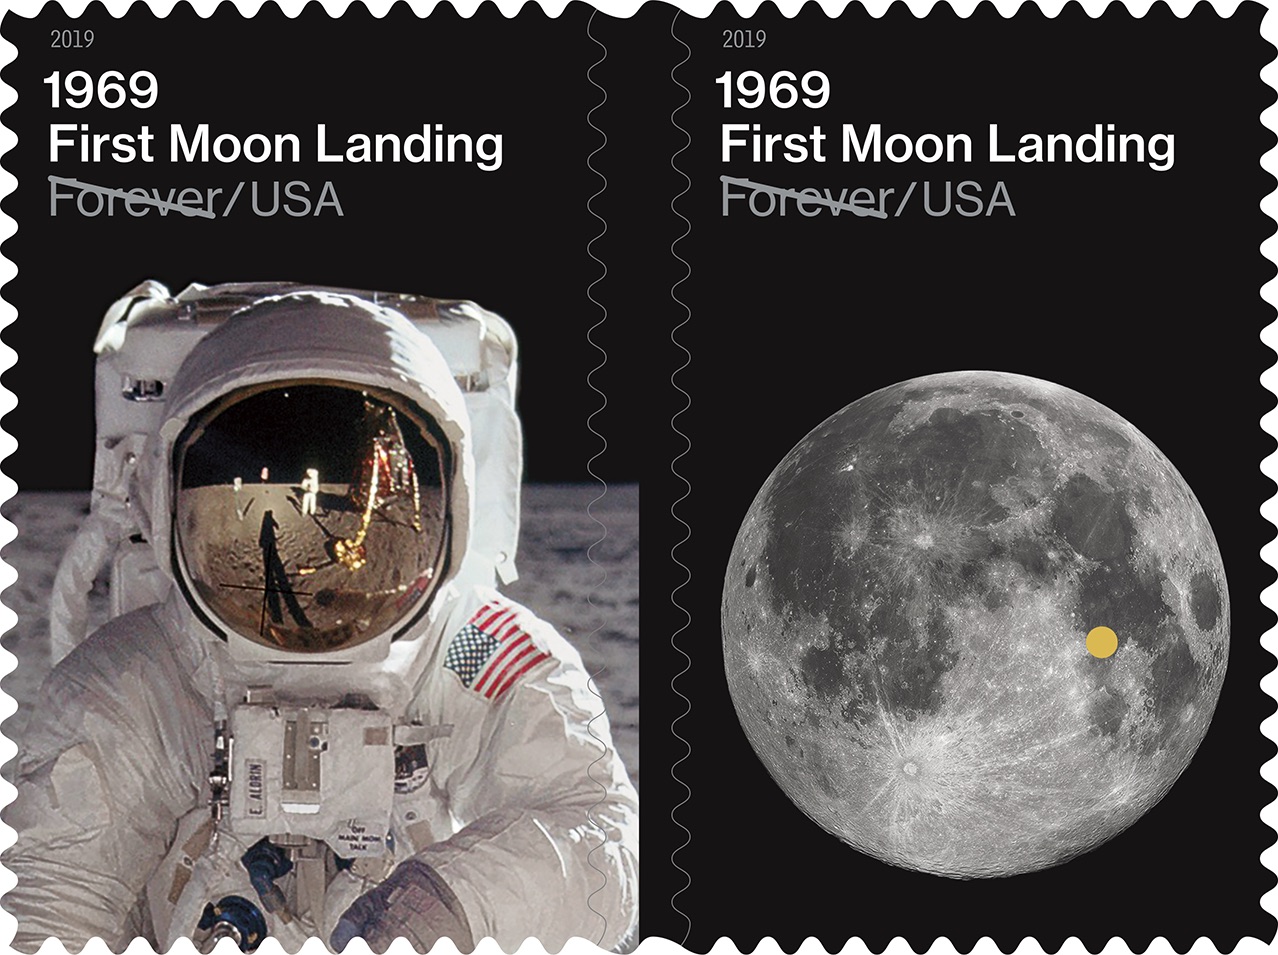 US Postal Service Celebrates Apollo 11 Moon Landing with 'Forever